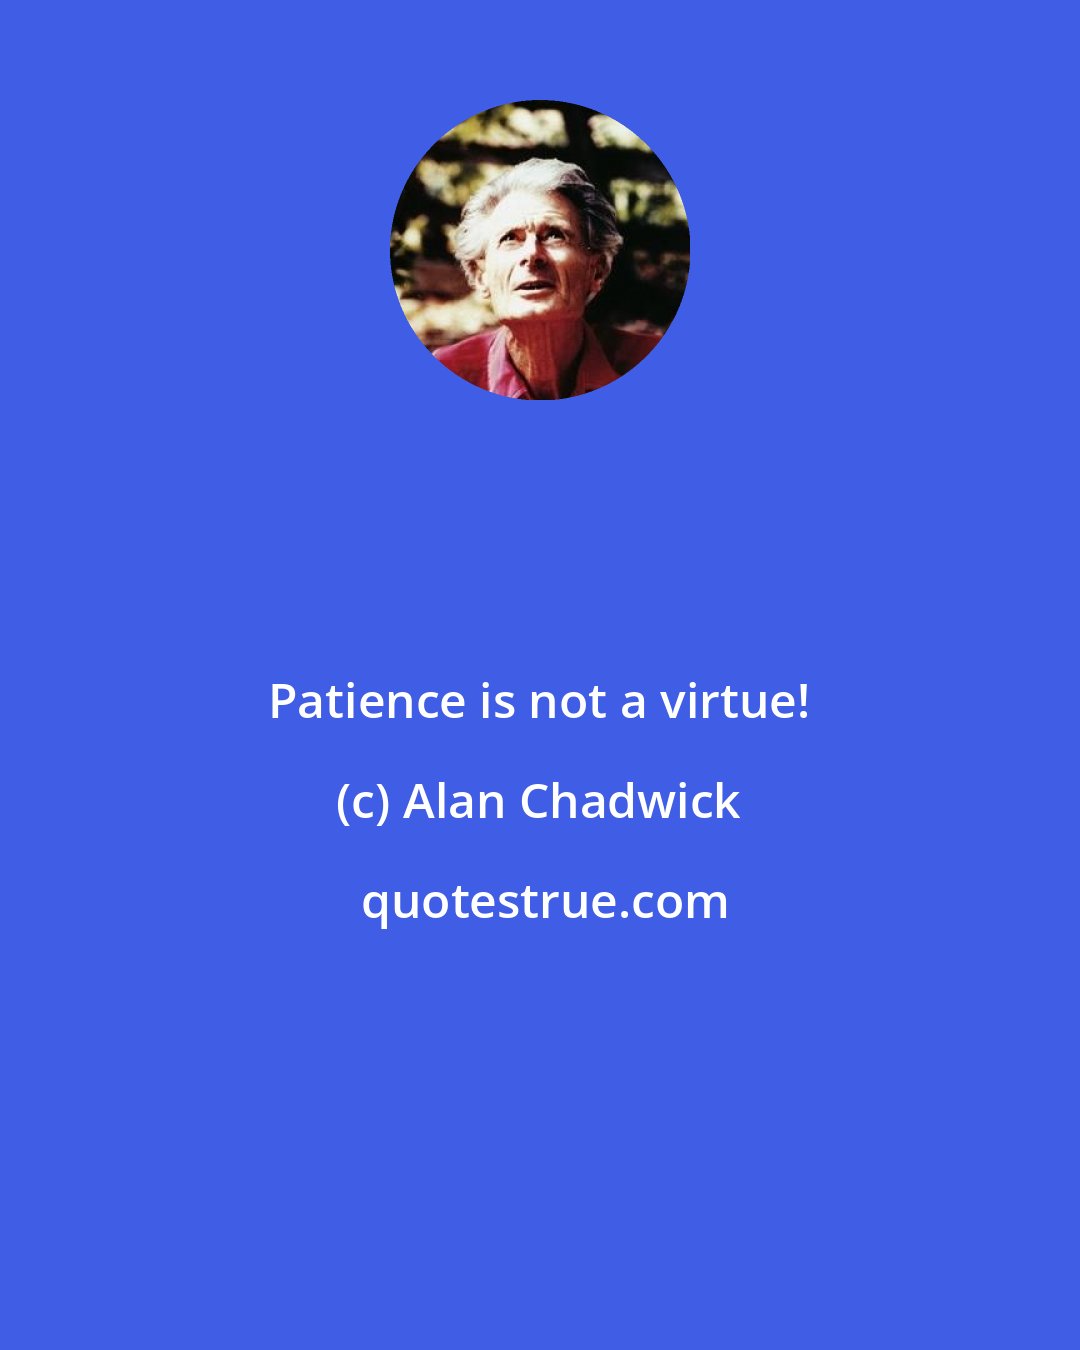 Alan Chadwick: Patience is not a virtue!